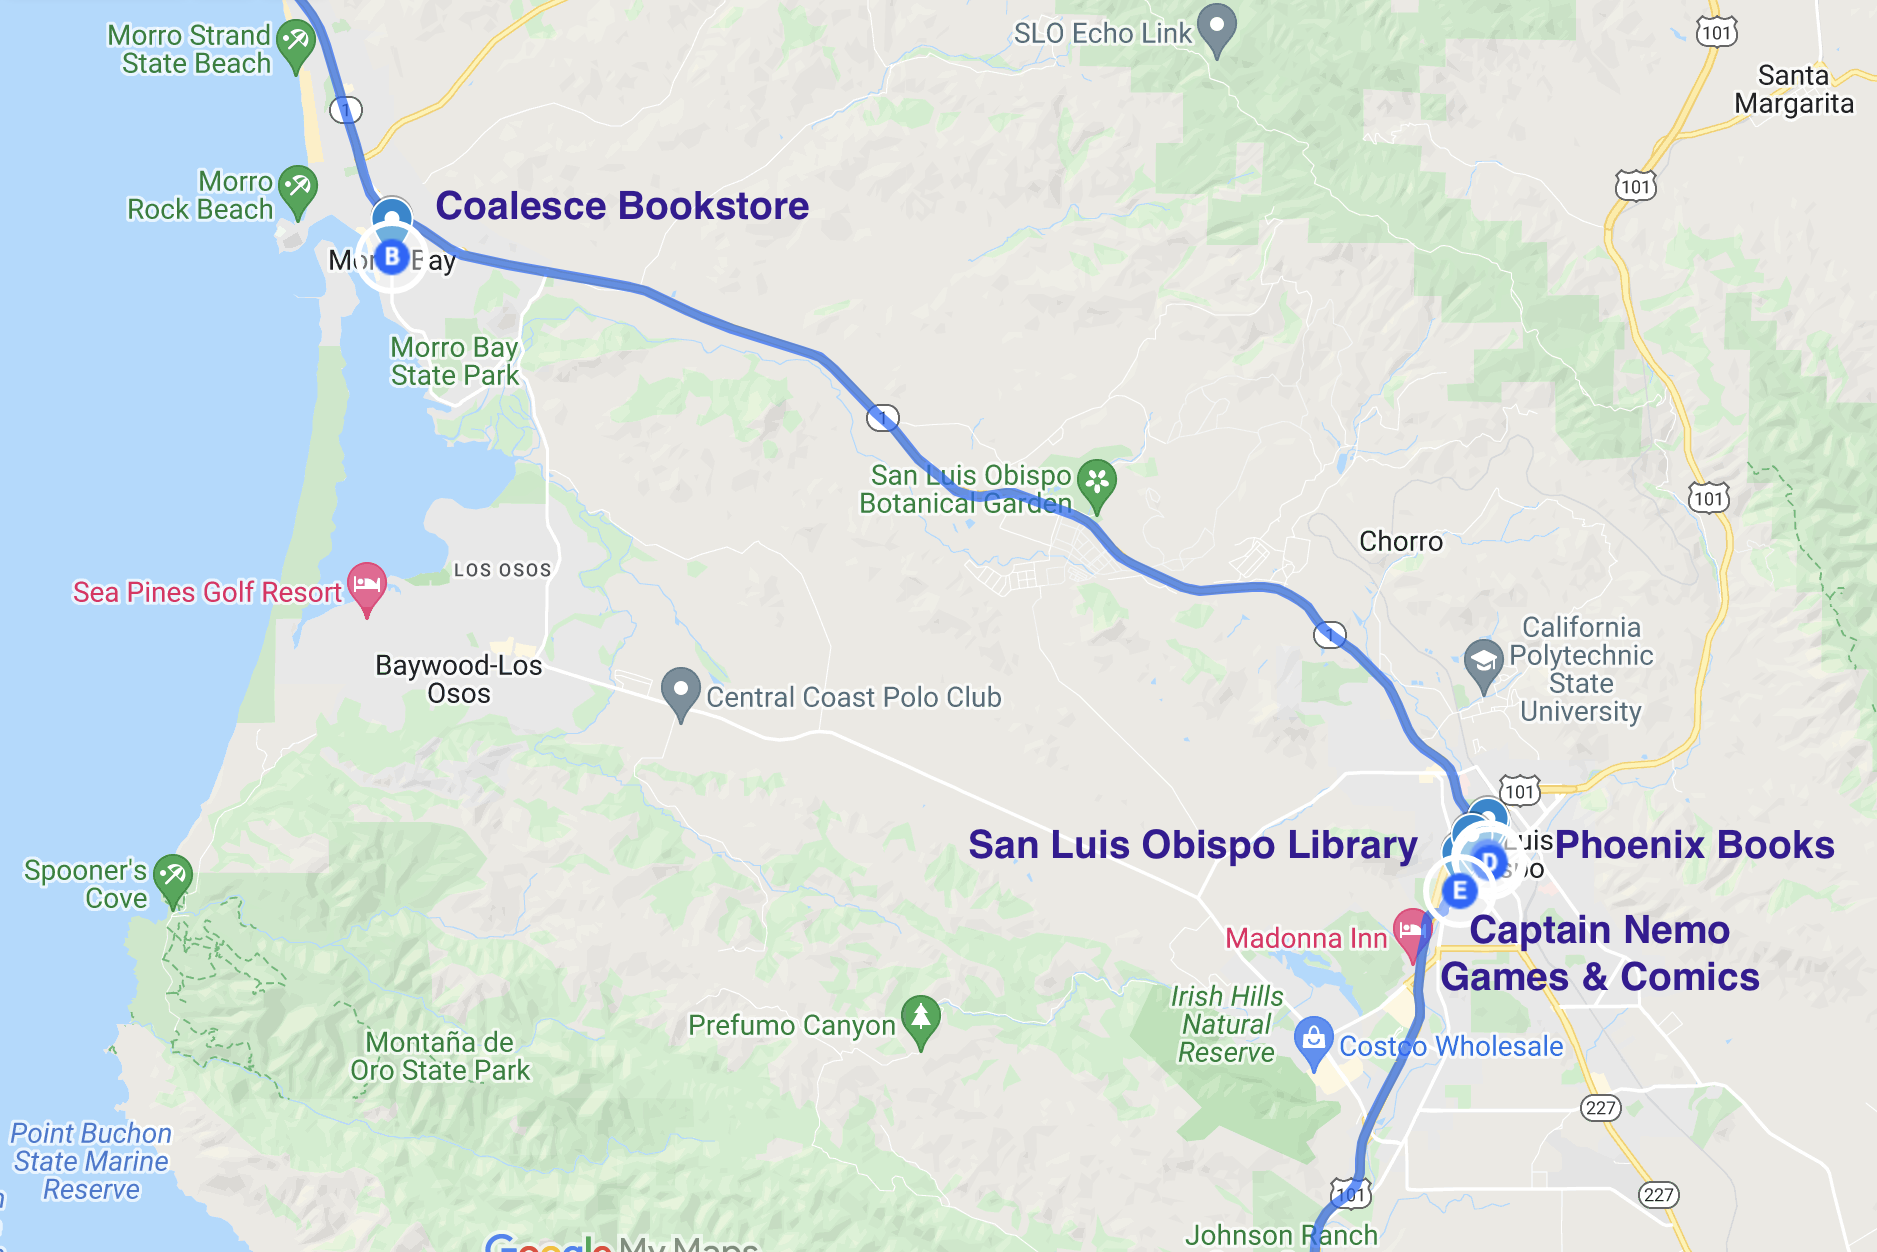 map of literary spots in San Luis Obispo California